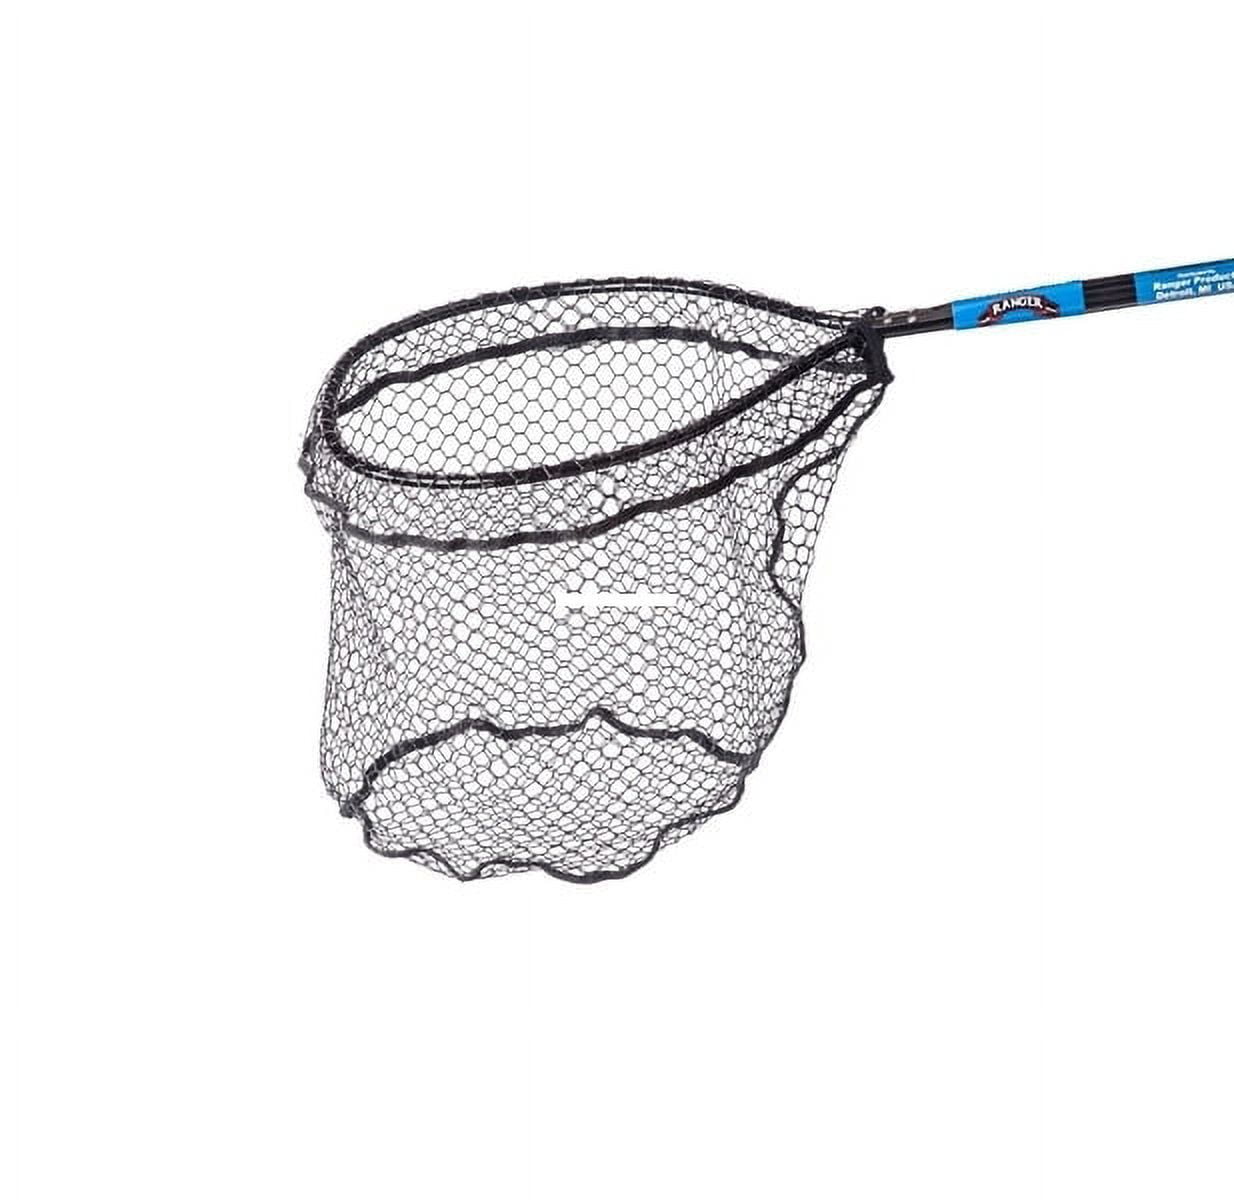 Ranger Hook-Free & Tangle-Free Molded Rubber Net